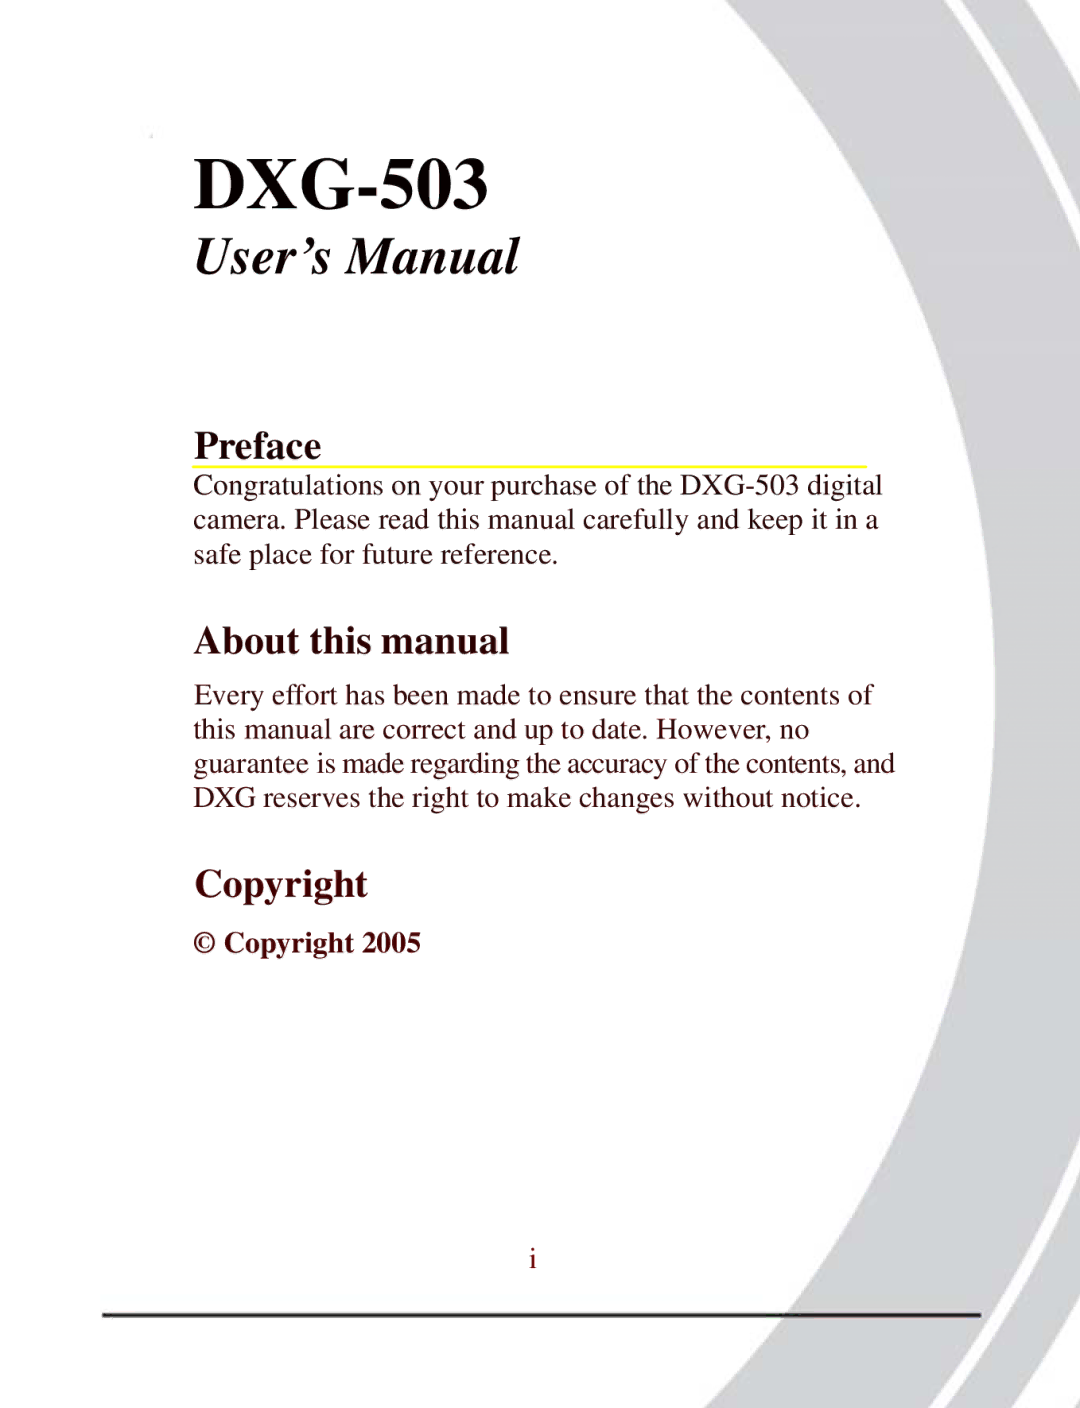 DXG Technology DXG-503 manual 